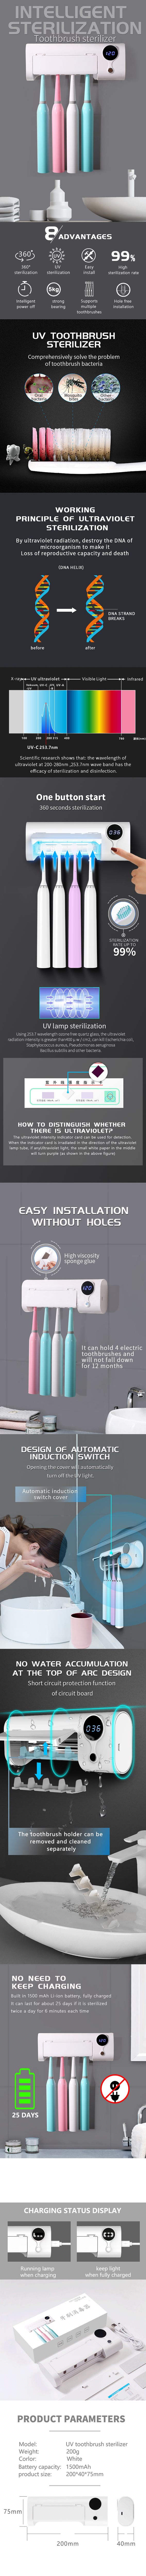 360 Angle 99% UV Lamp Sterilization Automatic Automatic Induction Switch Toothbrush Sanitizer Holder Wall Mounted